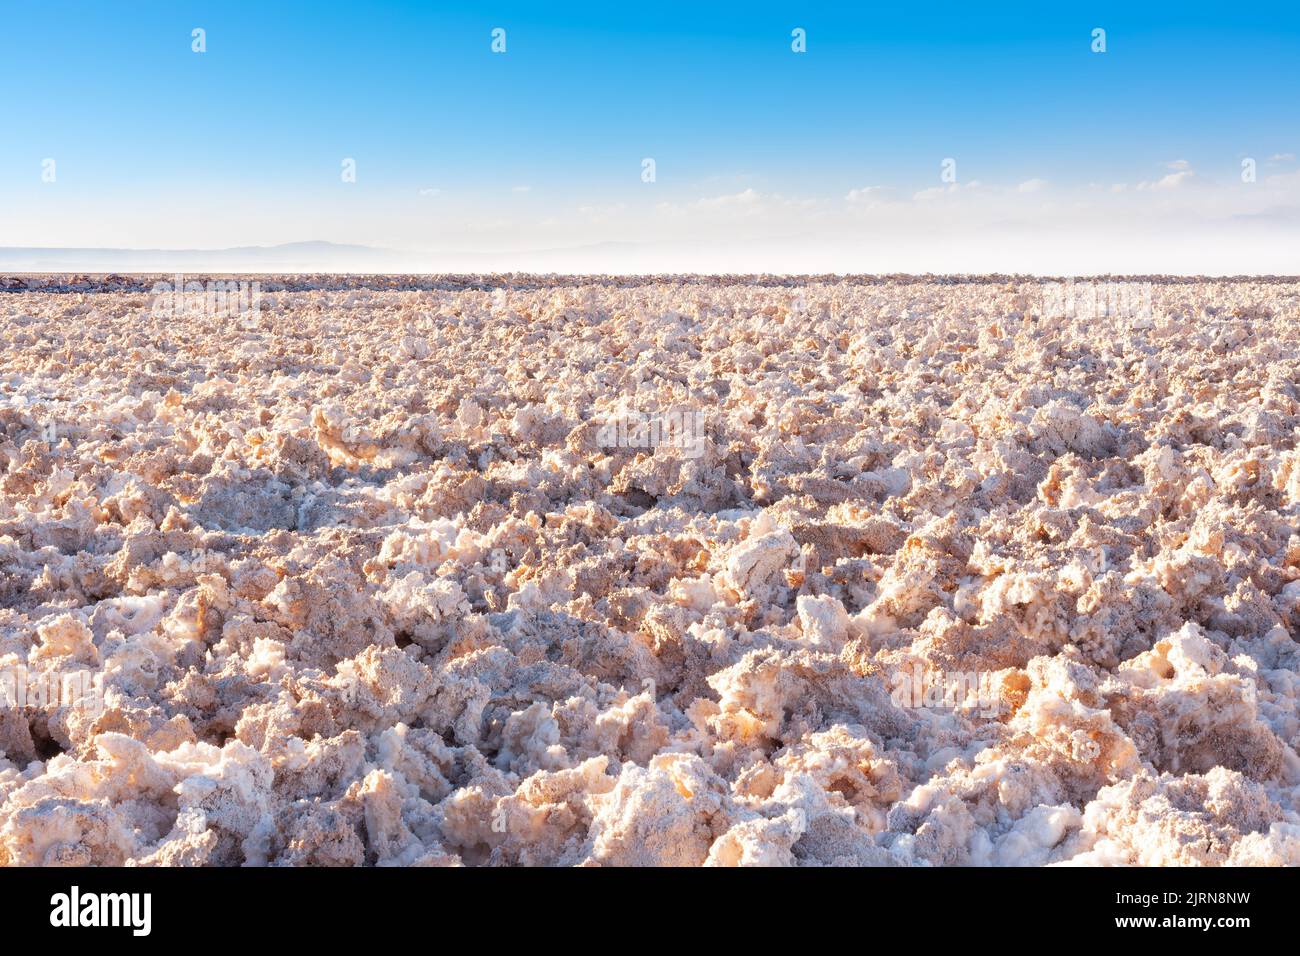 Lithium reserves in the salar de atacama at the Atacama desert in Chile. Stock Photo